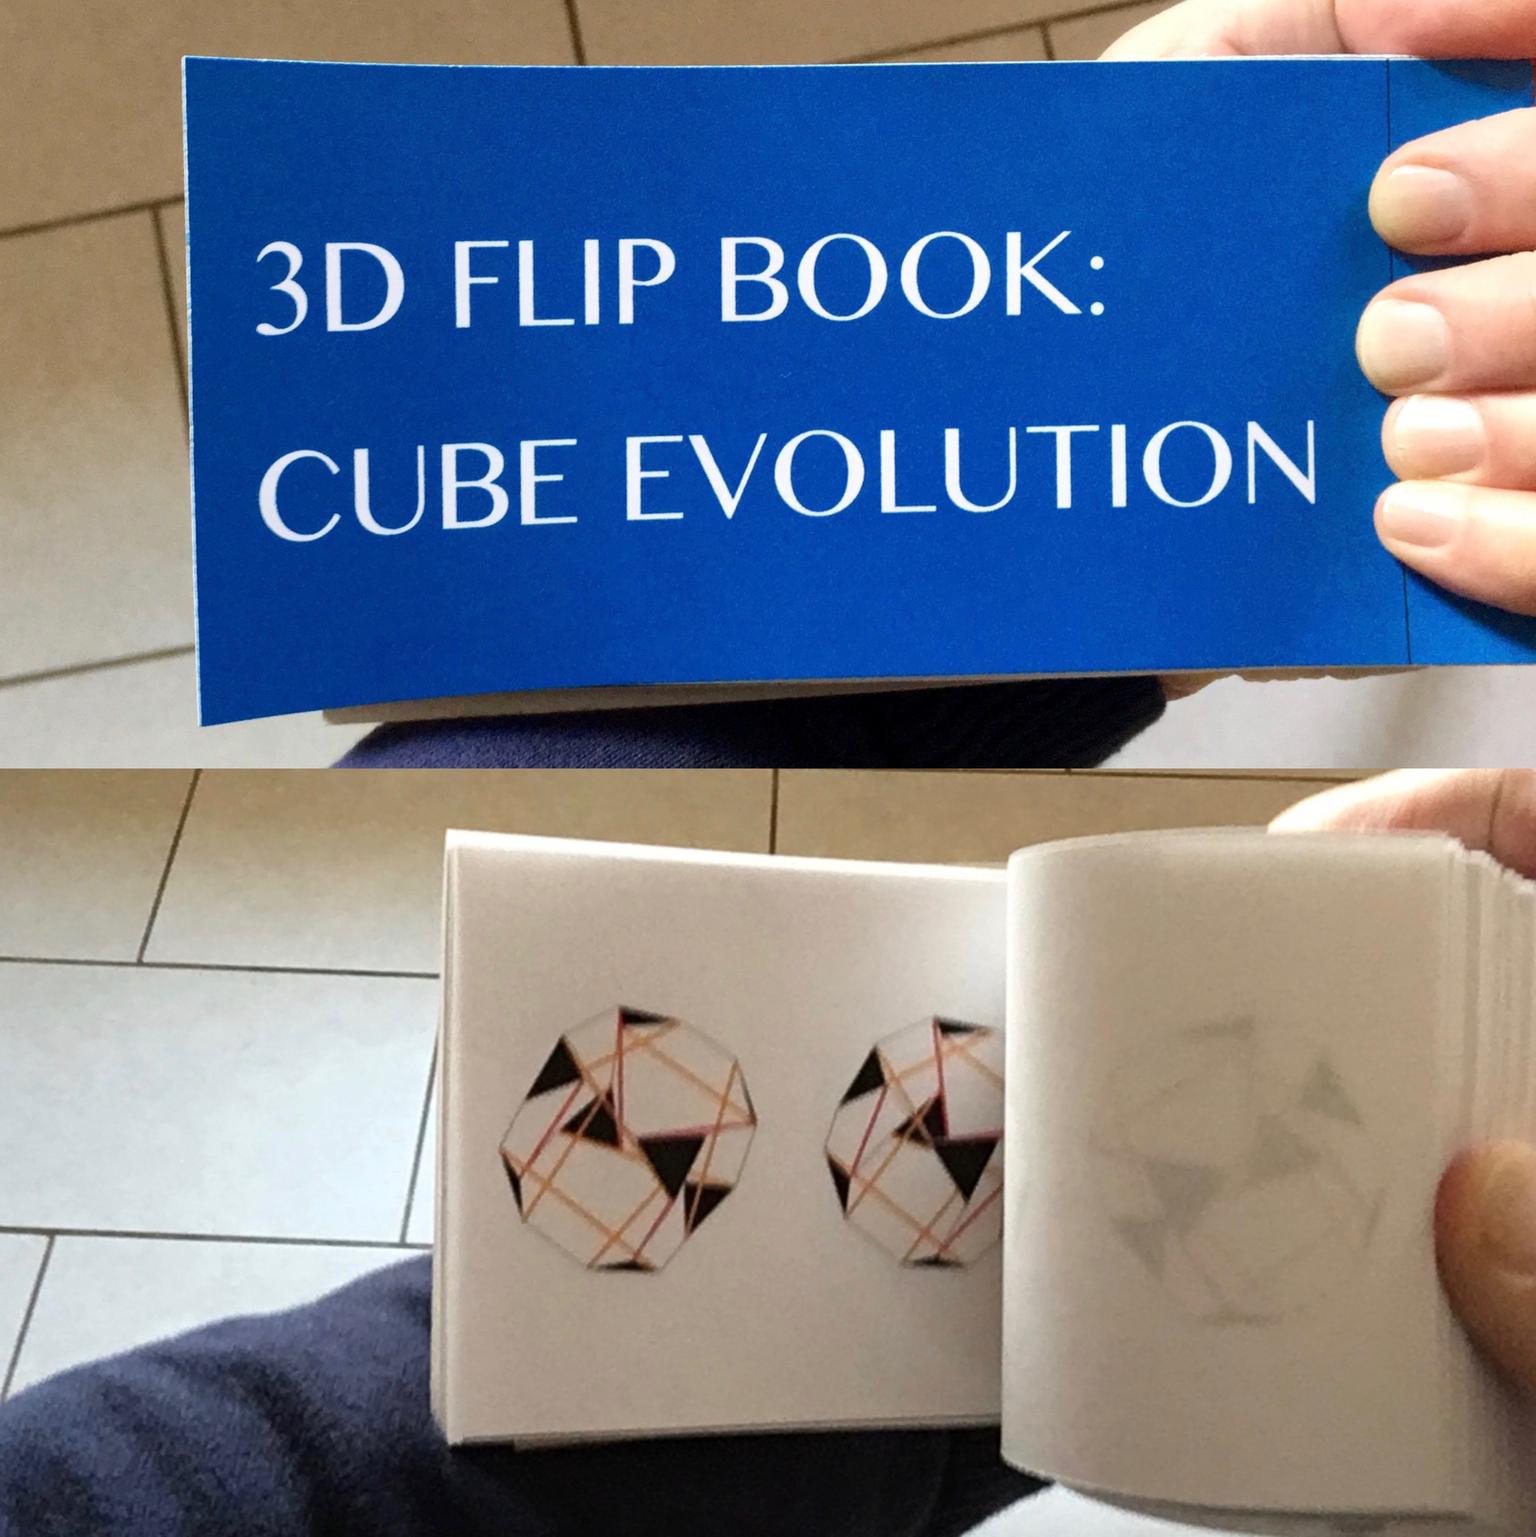 Image for entry '3D Flip Book: Cube Evolution'